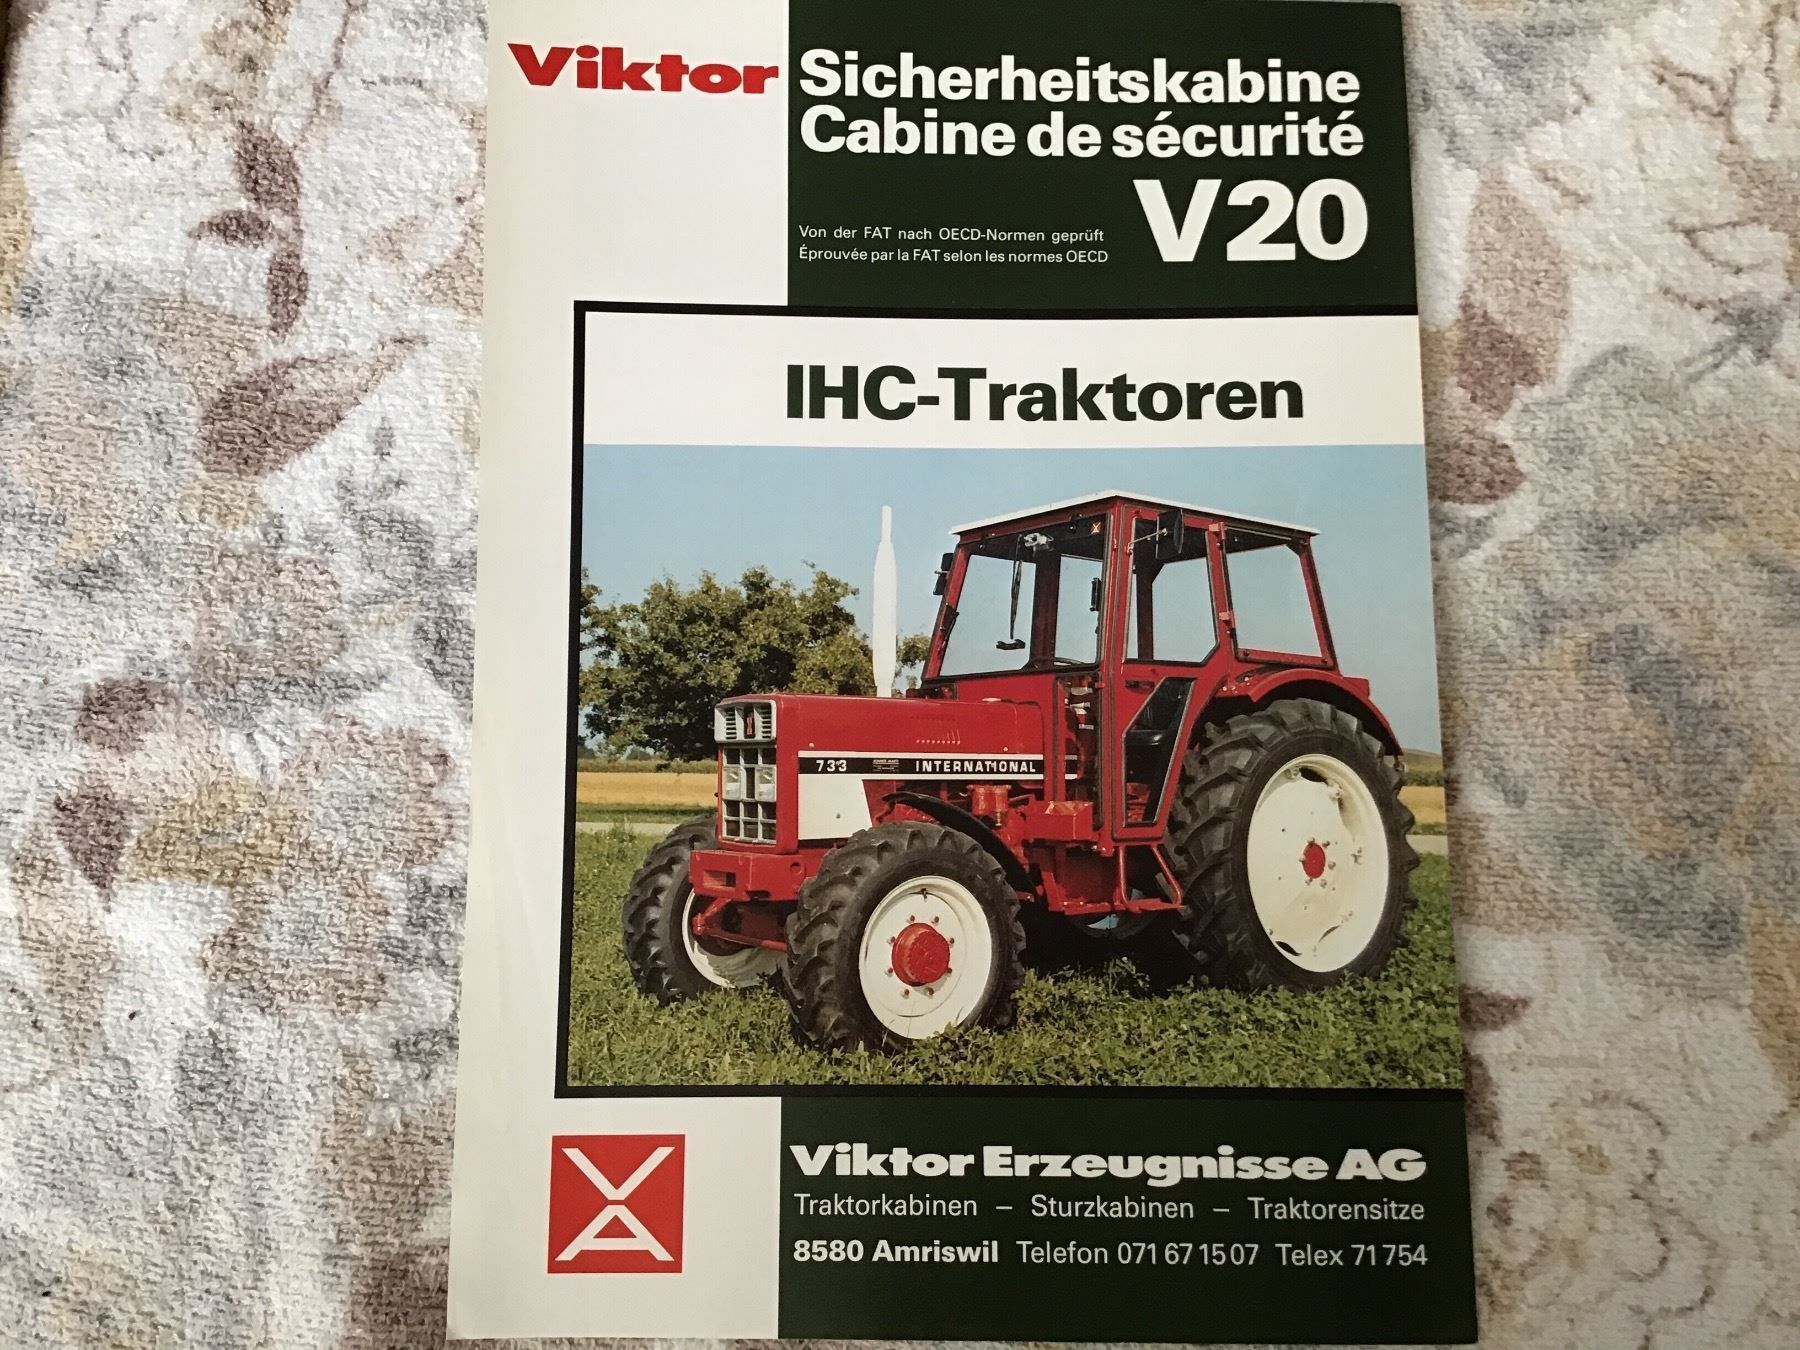 IHC-Traktoren Sicherheitskabine V 20